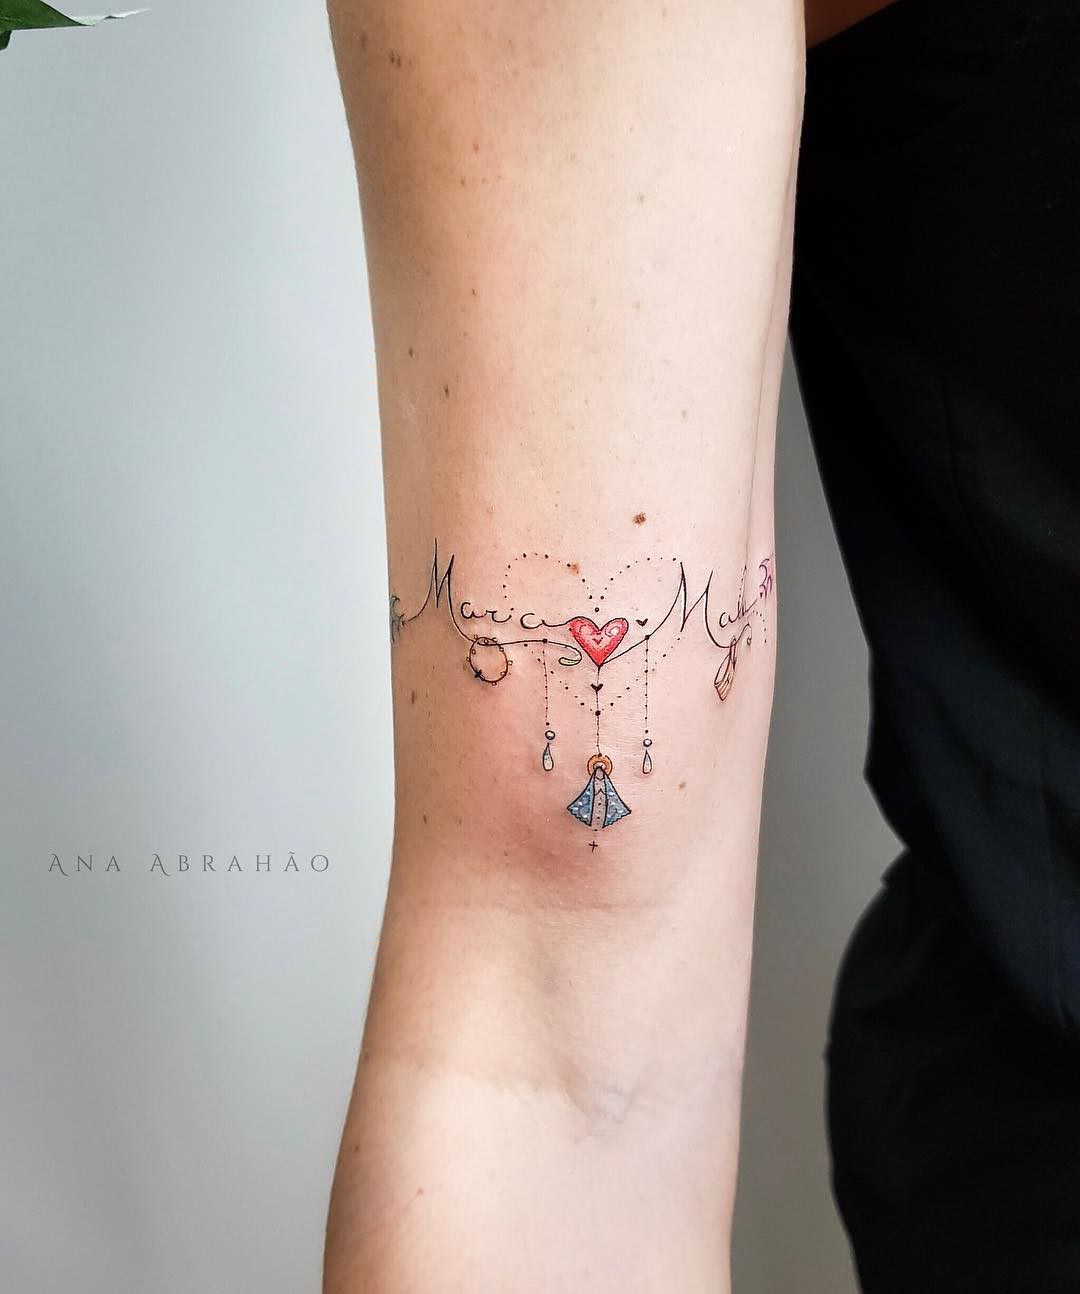 Lettering tattoos - Best Tattoo Ideas Gallery